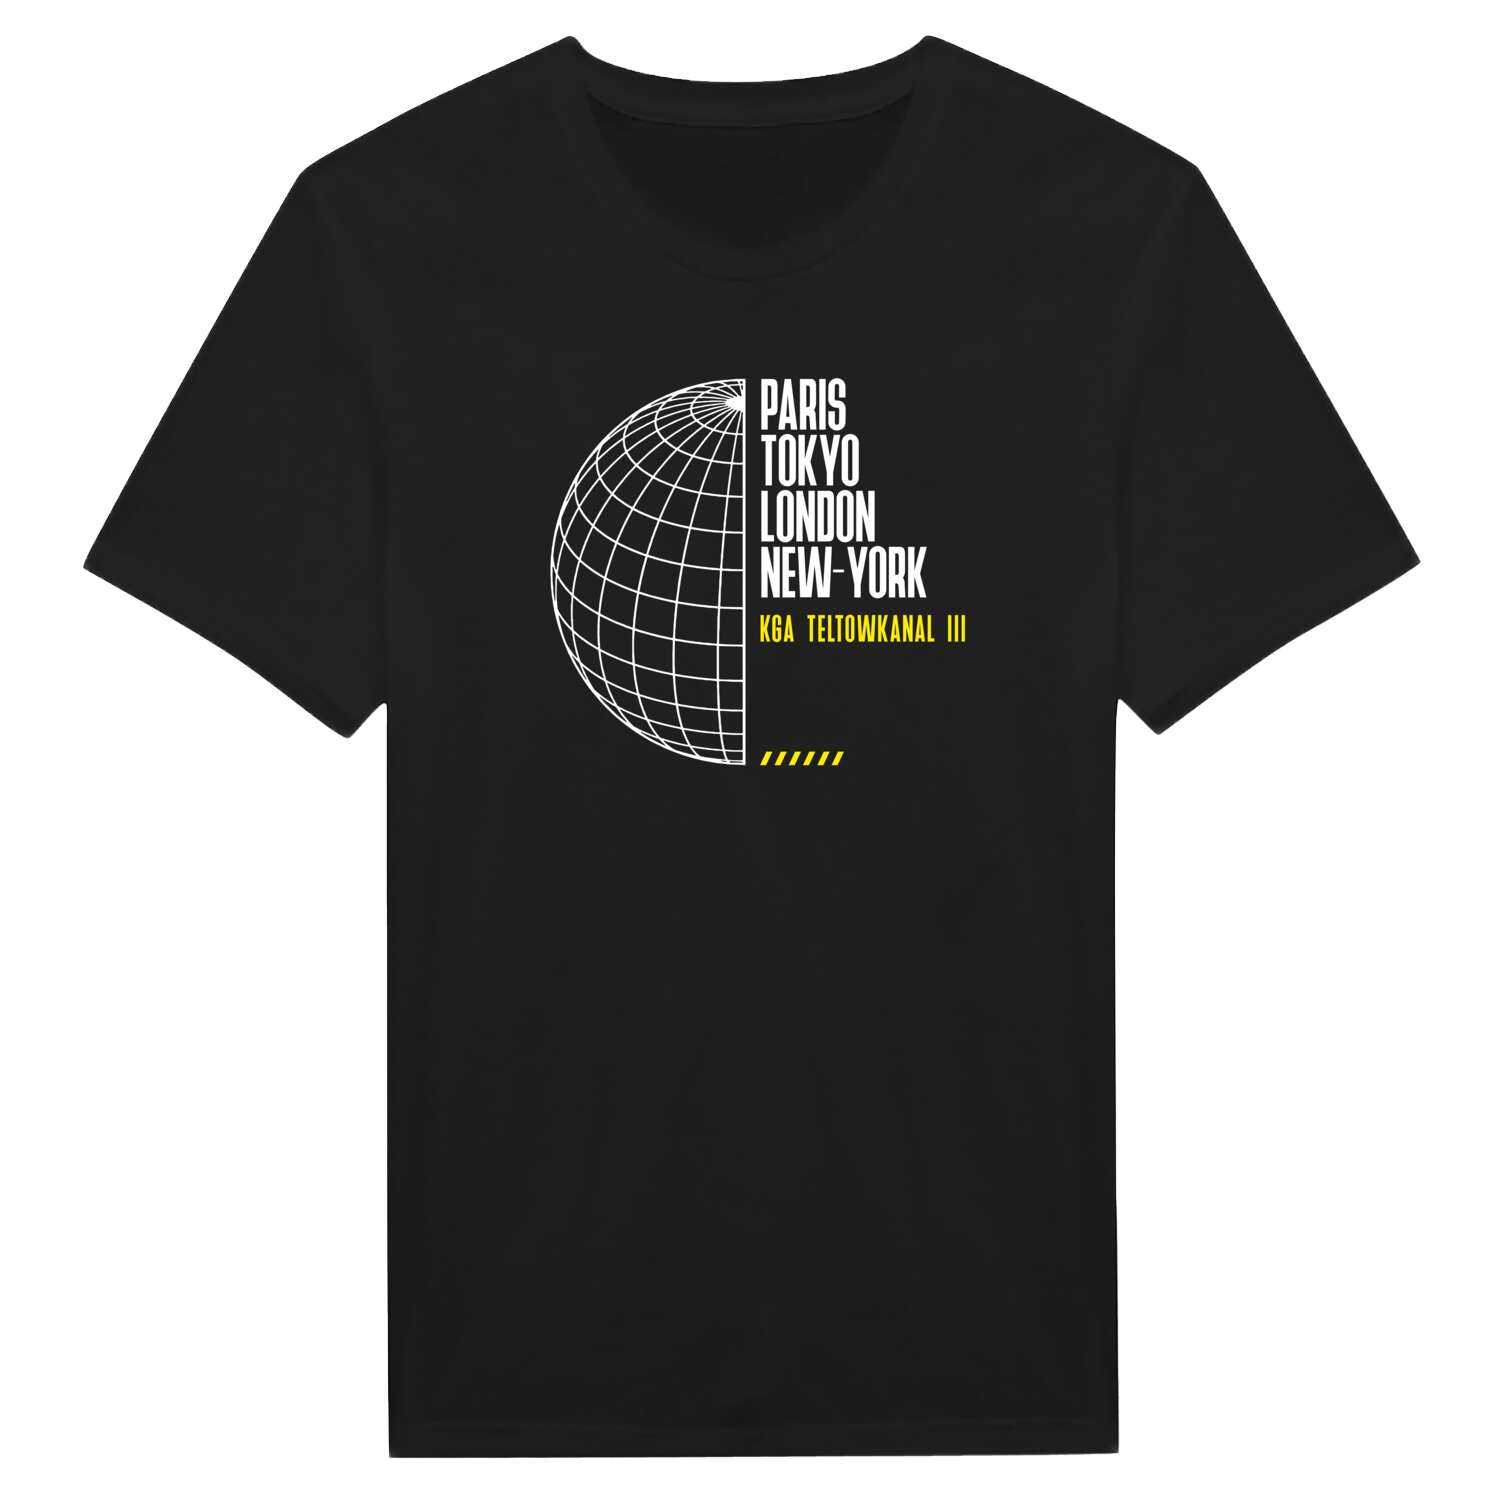 KGA Teltowkanal III T-Shirt »Paris Tokyo London«